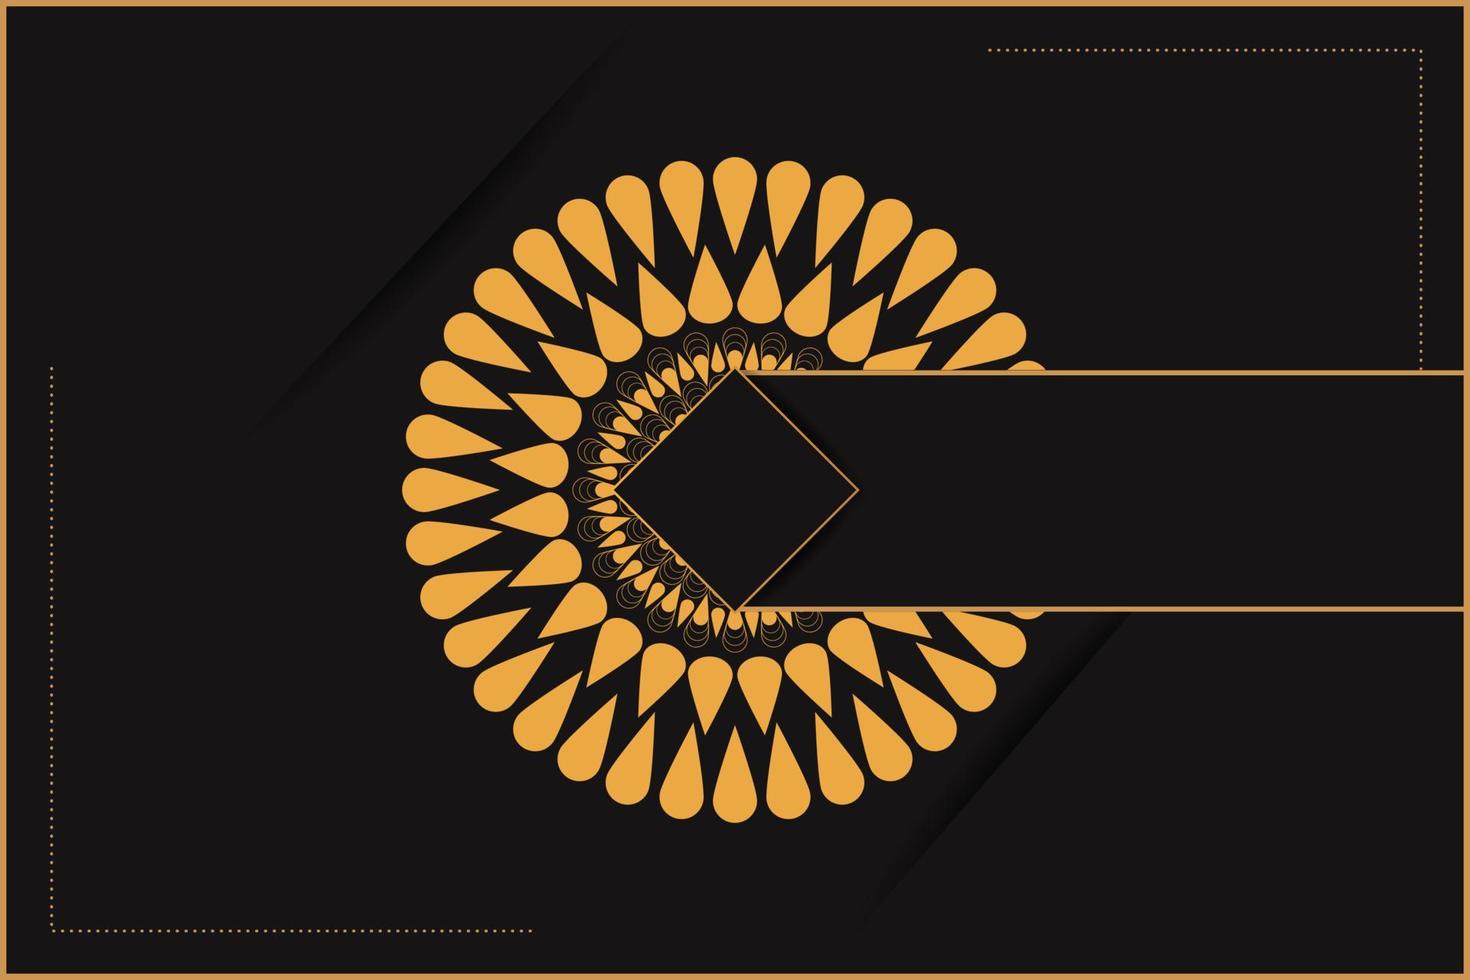 luxury ornamental mandala design background in gold color. ornament elegant invitation wedding card , invite ,Arabesque Pattern, Islamic, backdrop cover banner illustration vector design